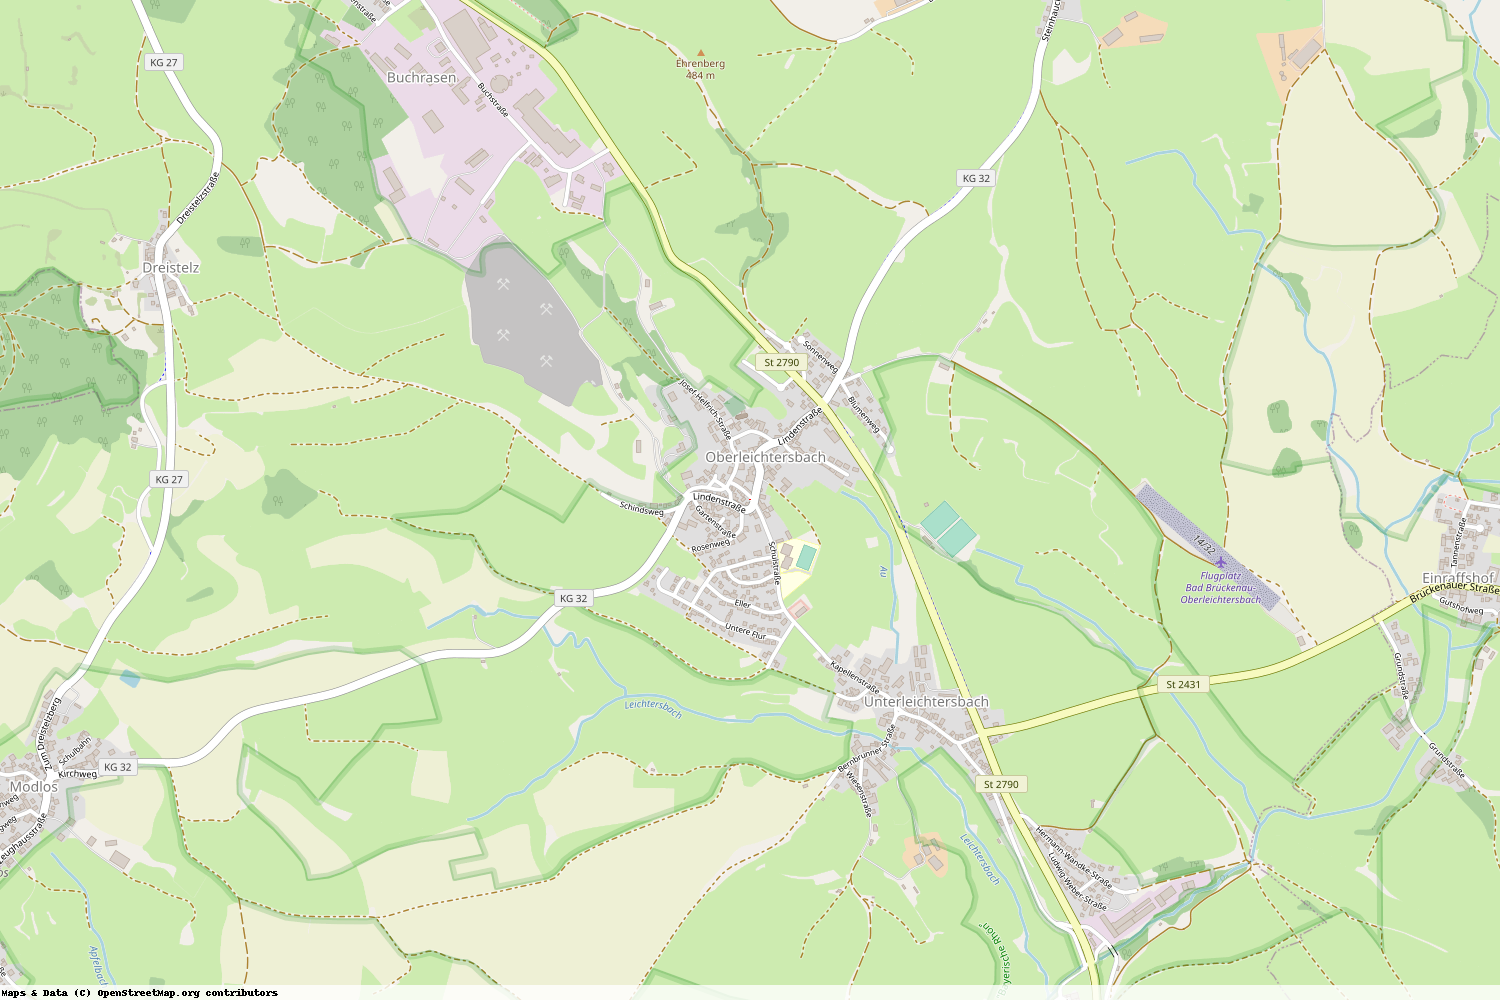 Ist gerade Stromausfall in Bayern - Bad Kissingen - Oberleichtersbach?